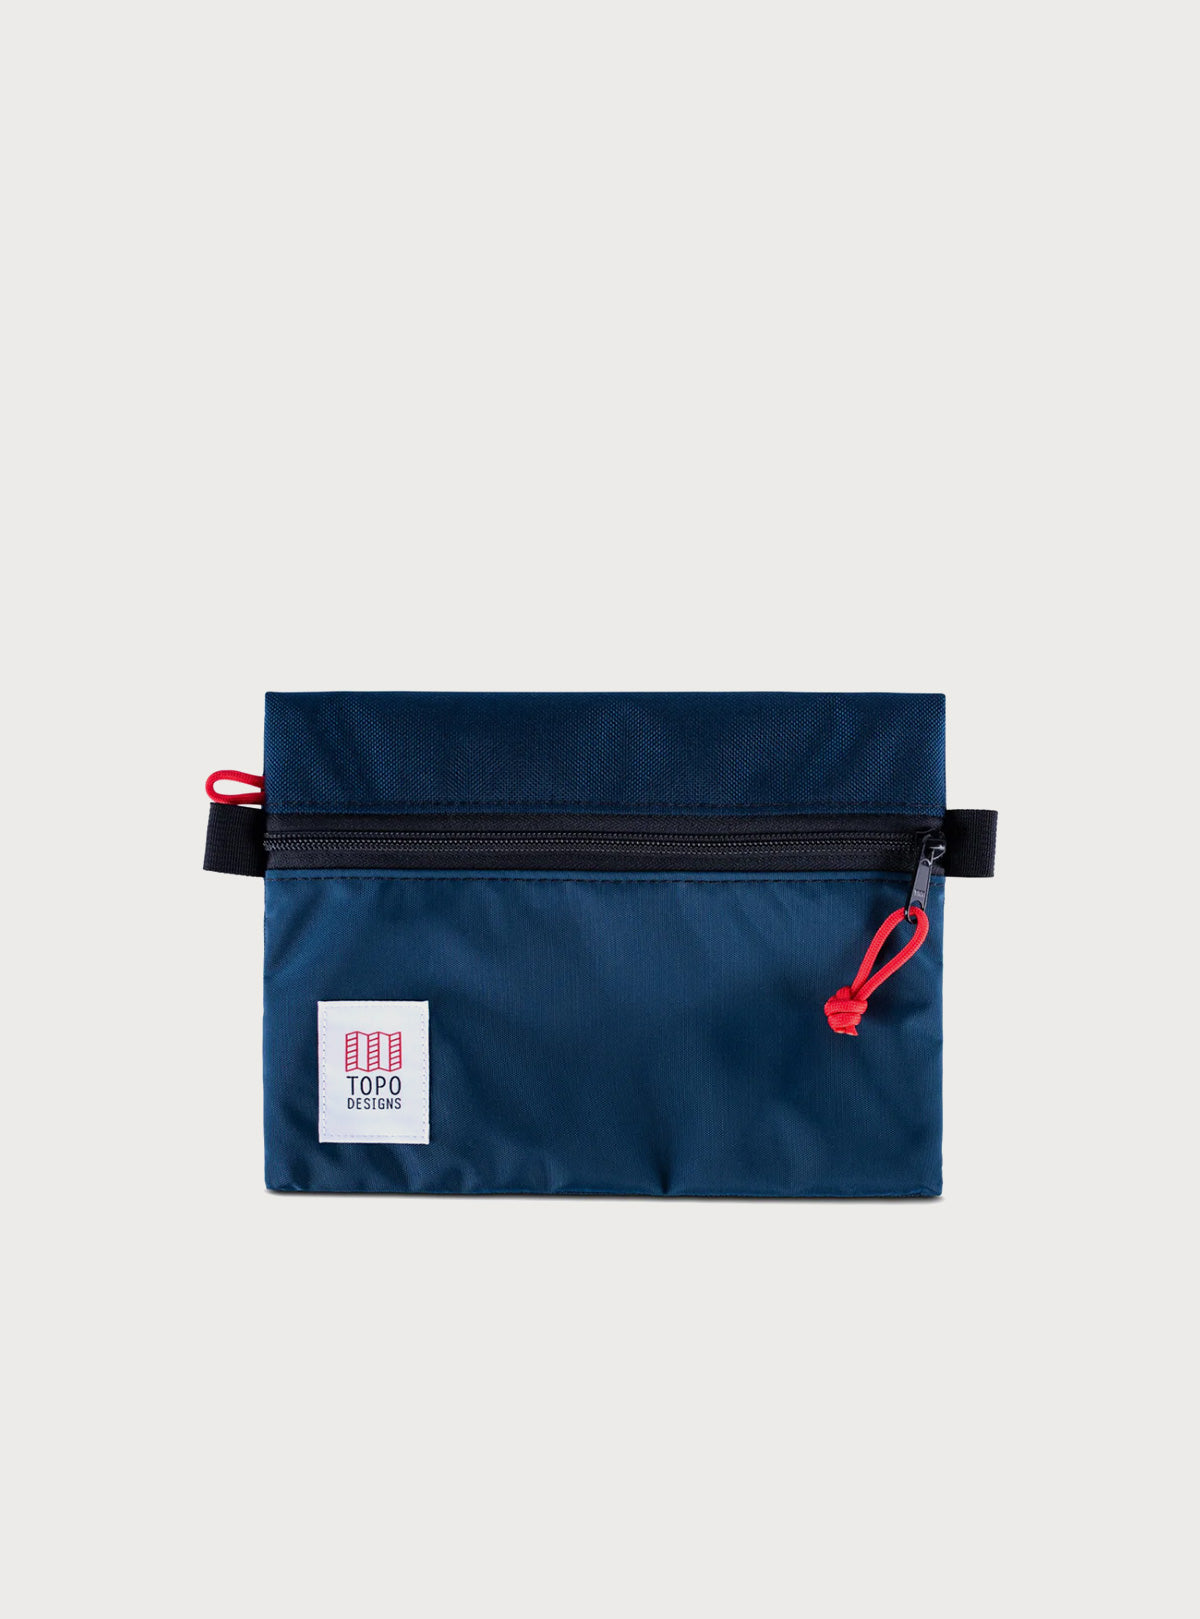 Topo - Accessory Bag M - Navy